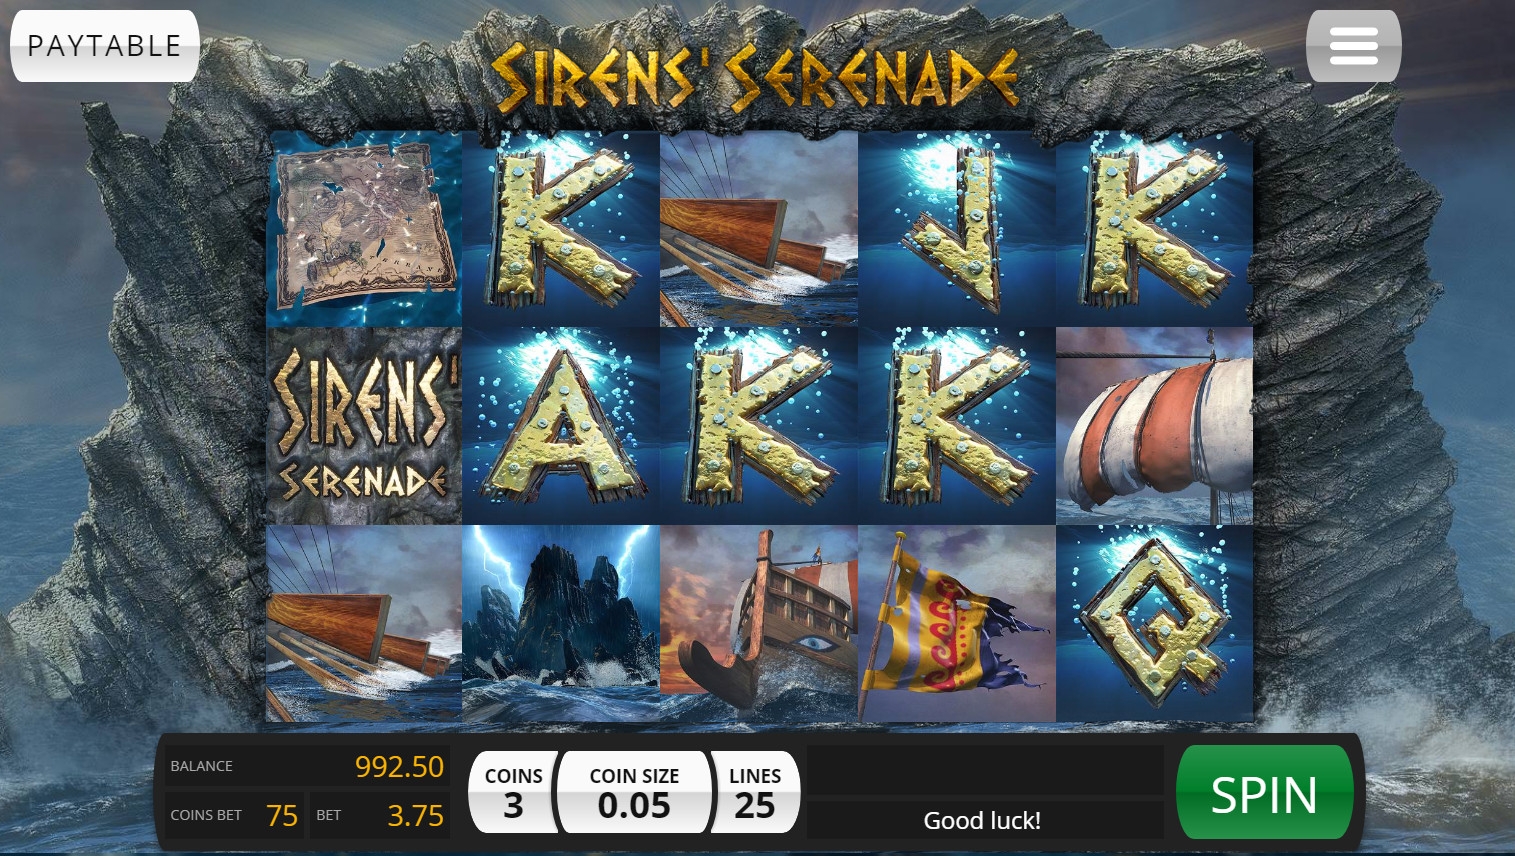 Sirens’ Serenade (Sirens’ Serenade) from category Slots